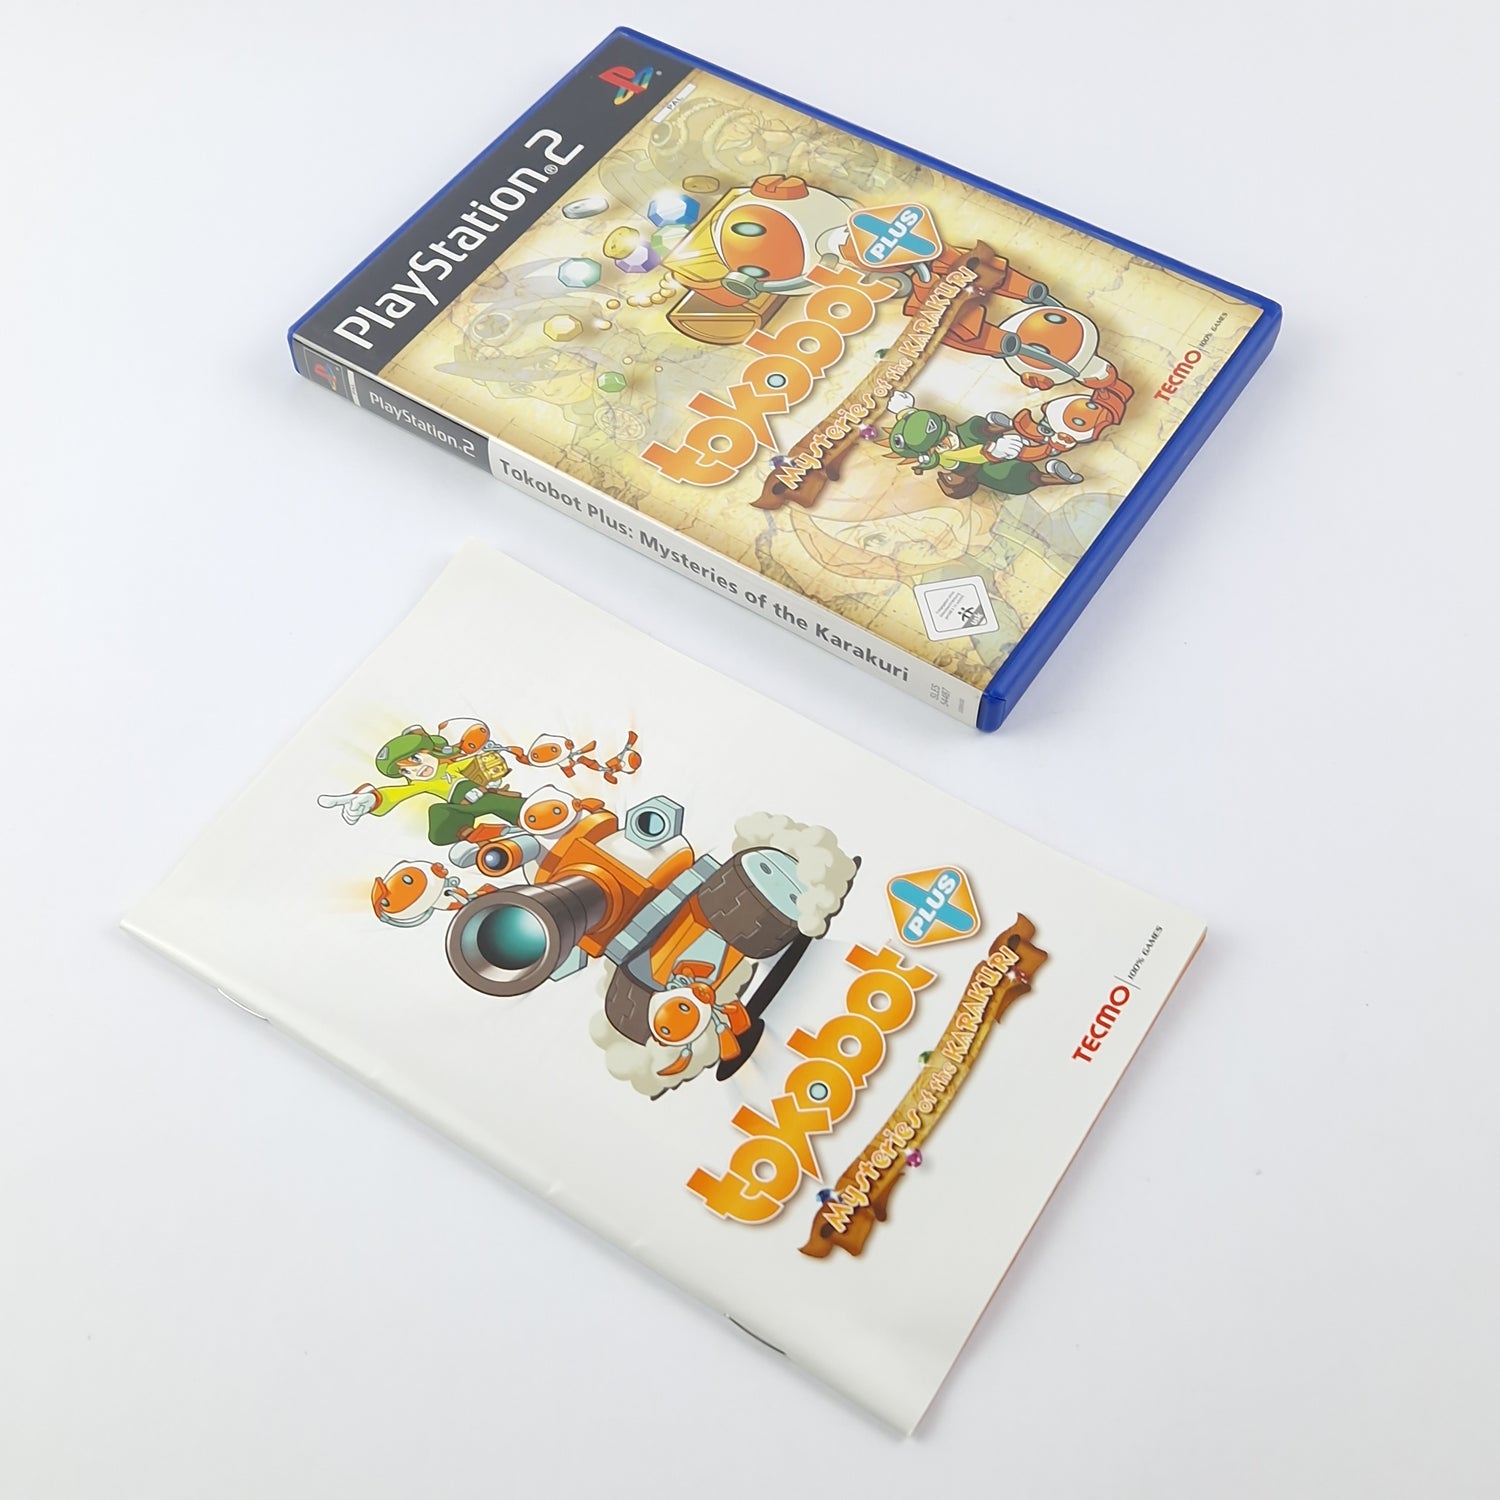 Playstation 2 Spiel : Tokobot Plus Mysteries of the Karakuri - OVP Anleitung CD